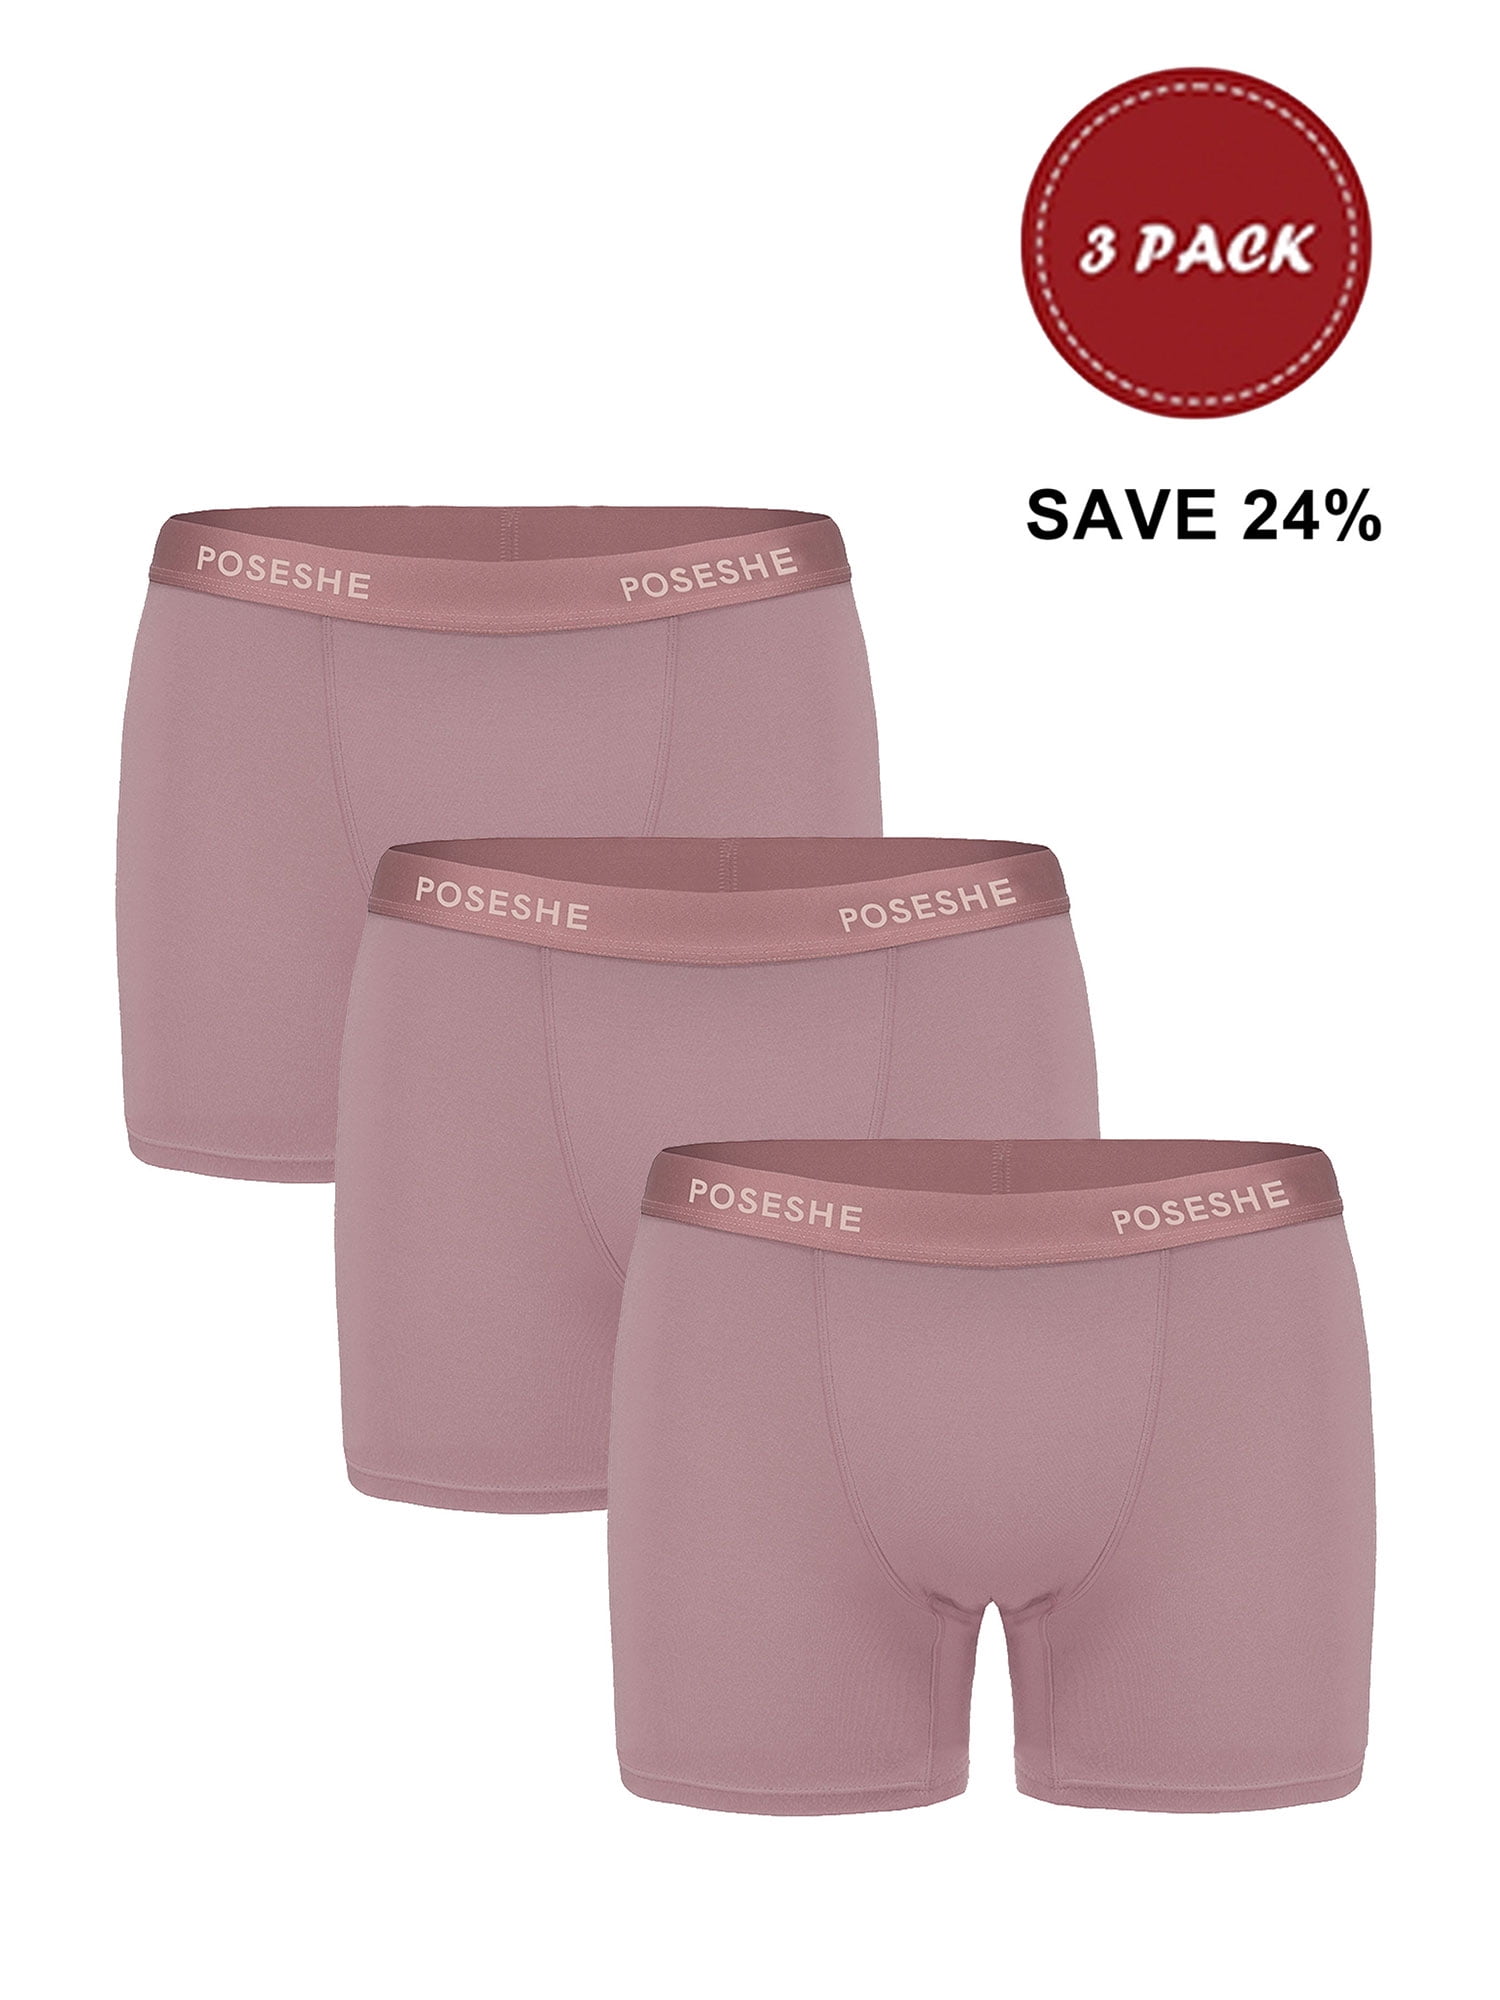 POSESHE Women's Boxer Underwear, Plus Size Boyshorts Panties 6/8 Inseam